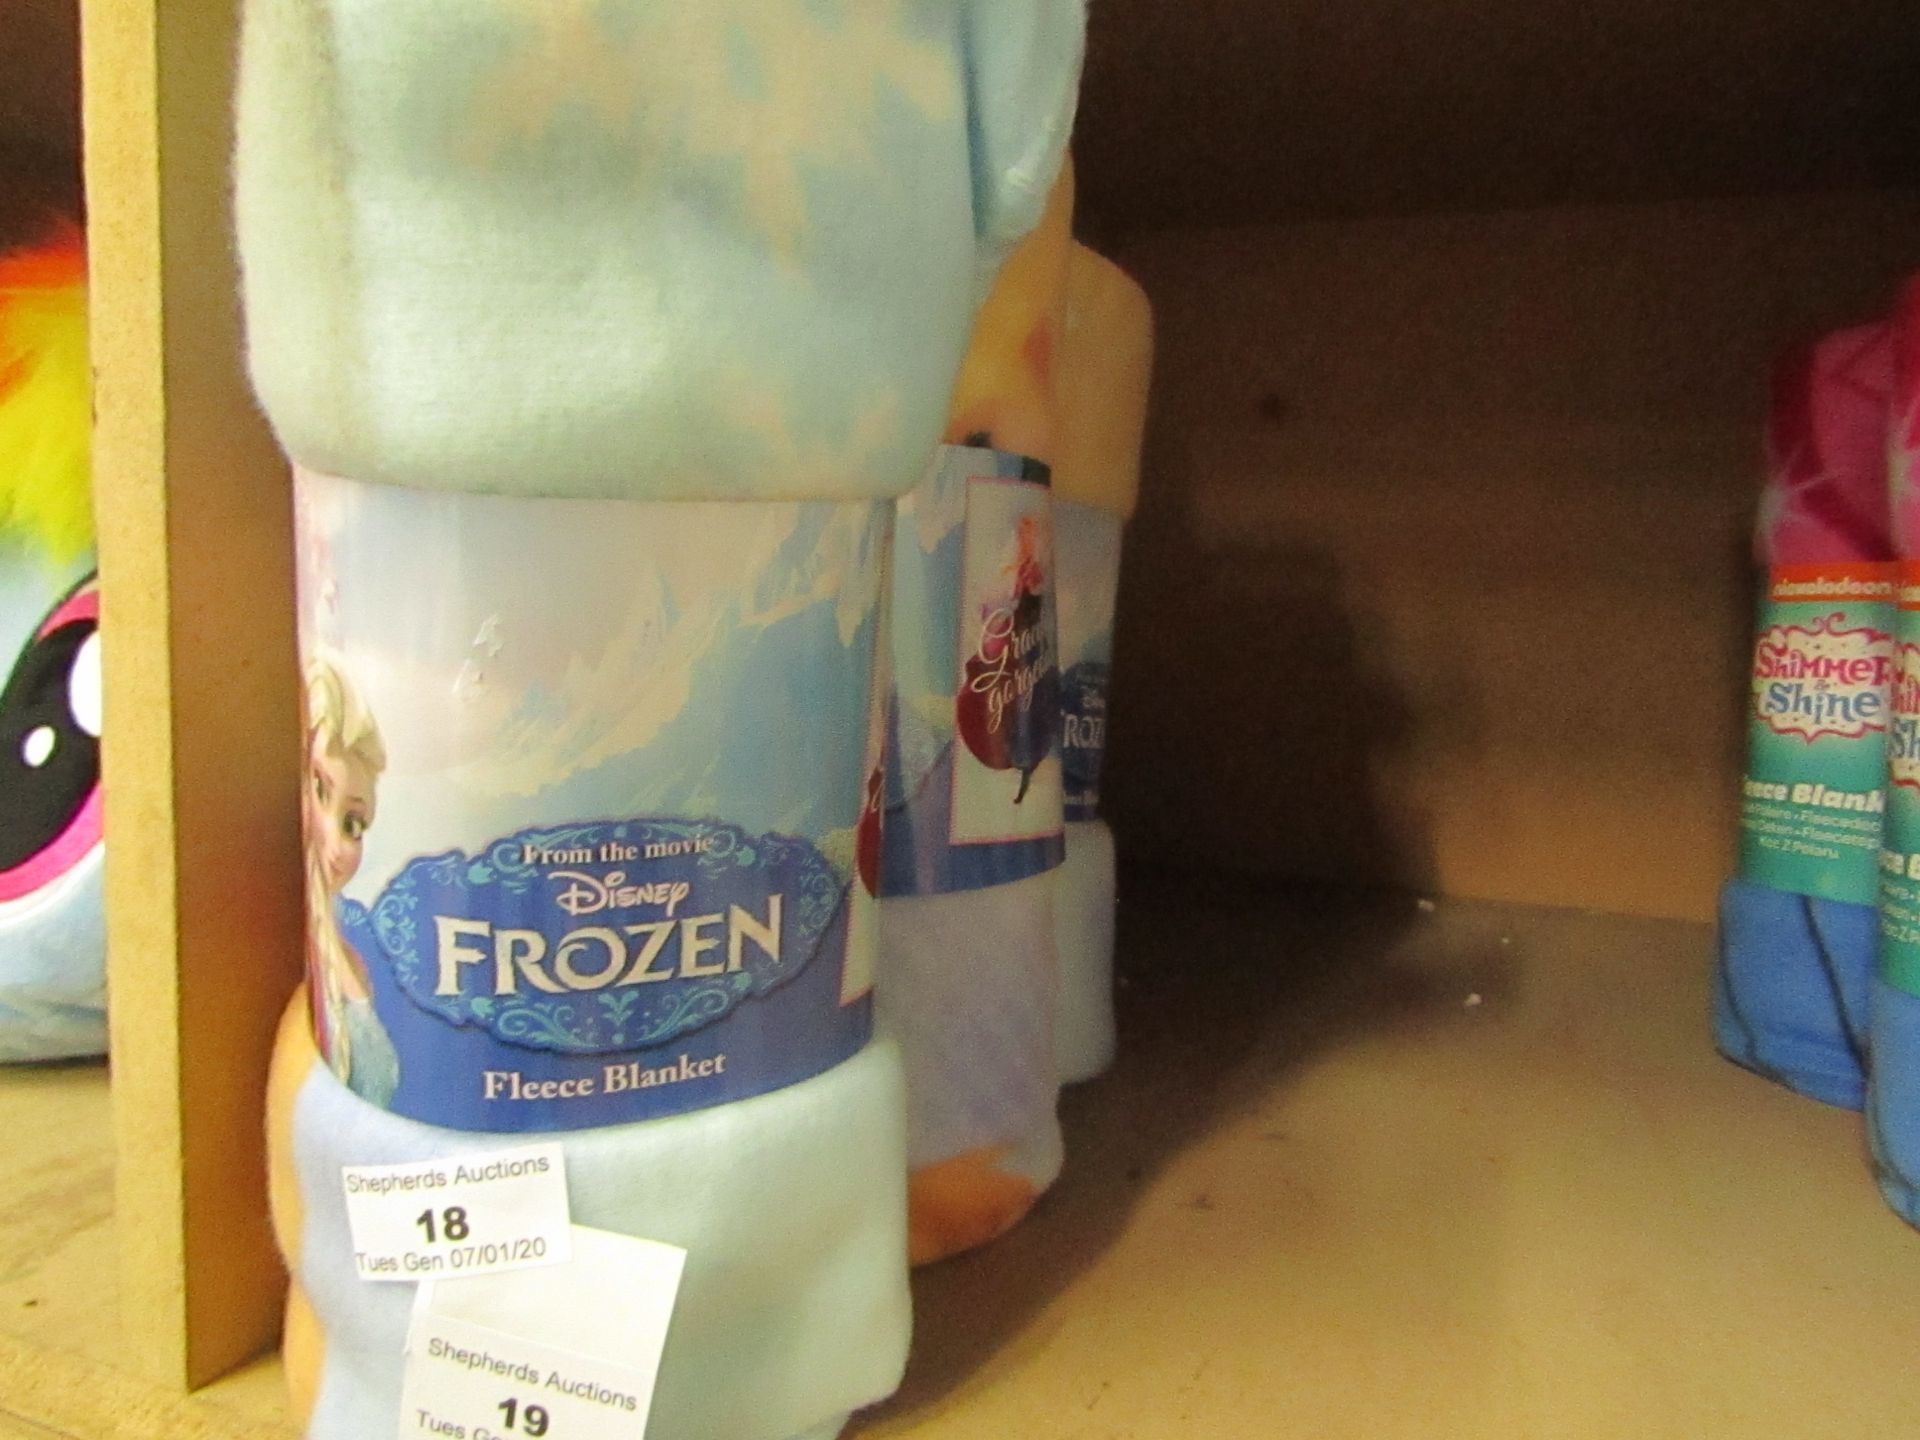 Frozen fleece blanket, new and packaged.